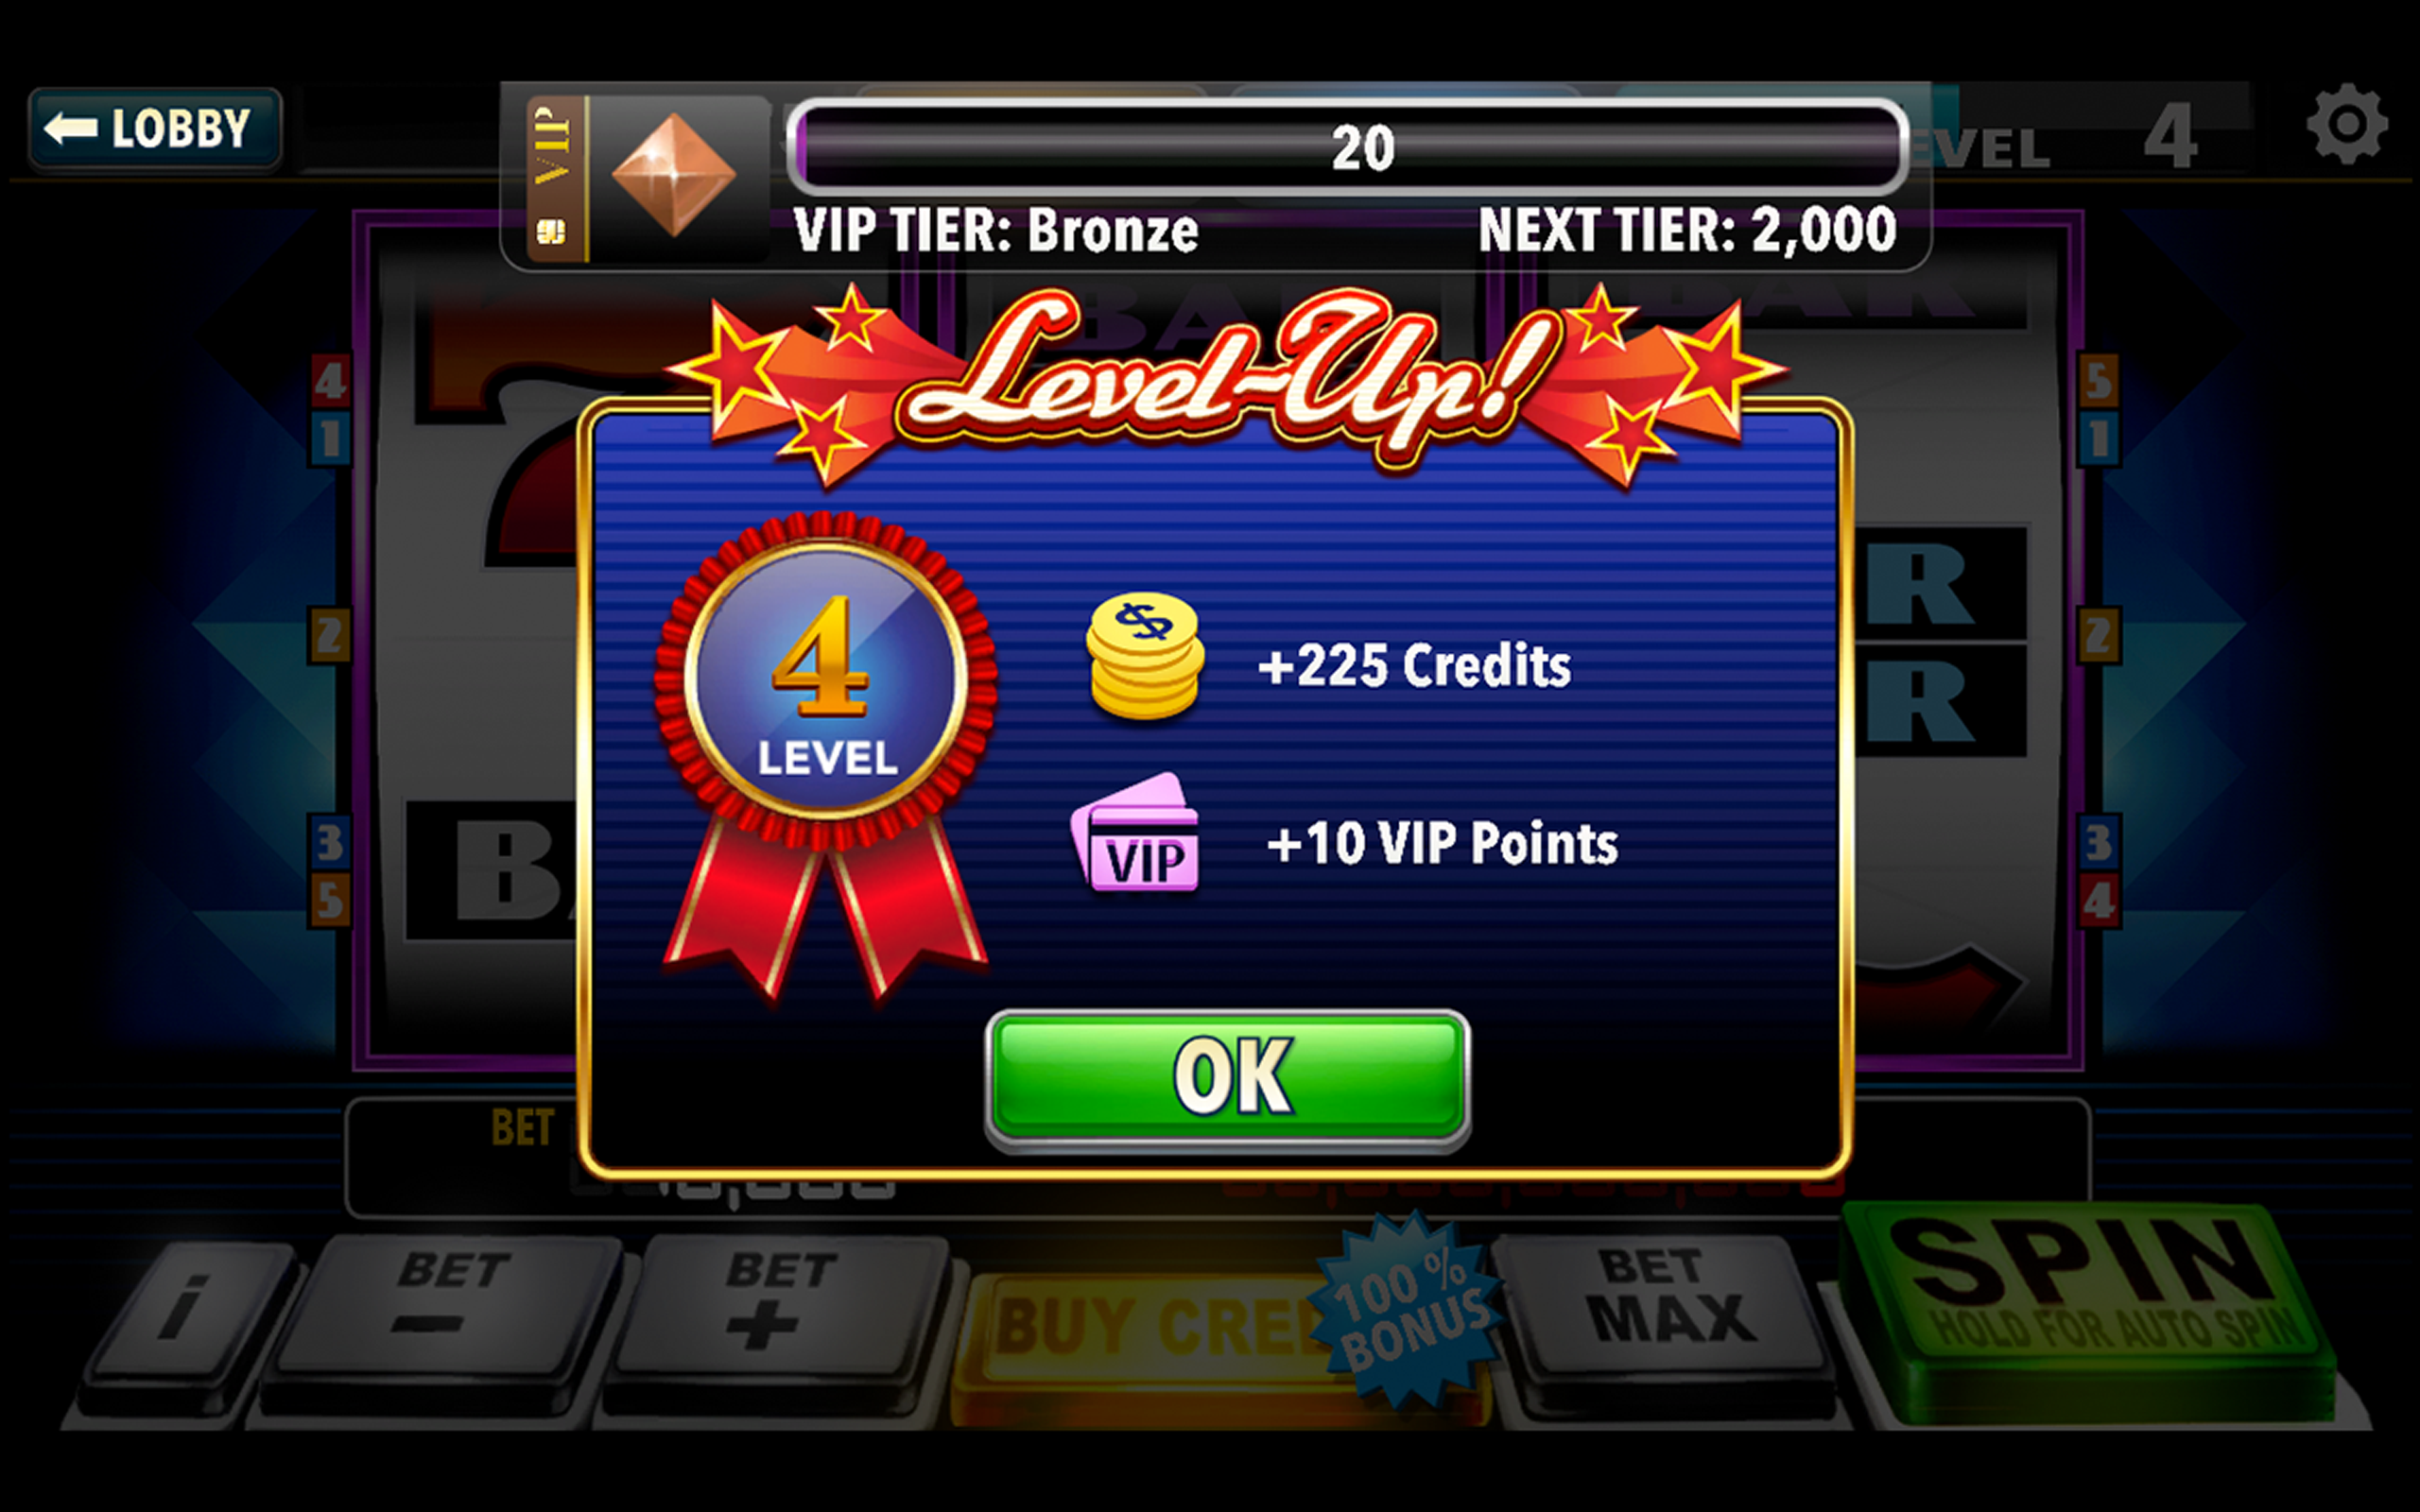 Juegos Joreels com free slot machine bonus rounds - 56655